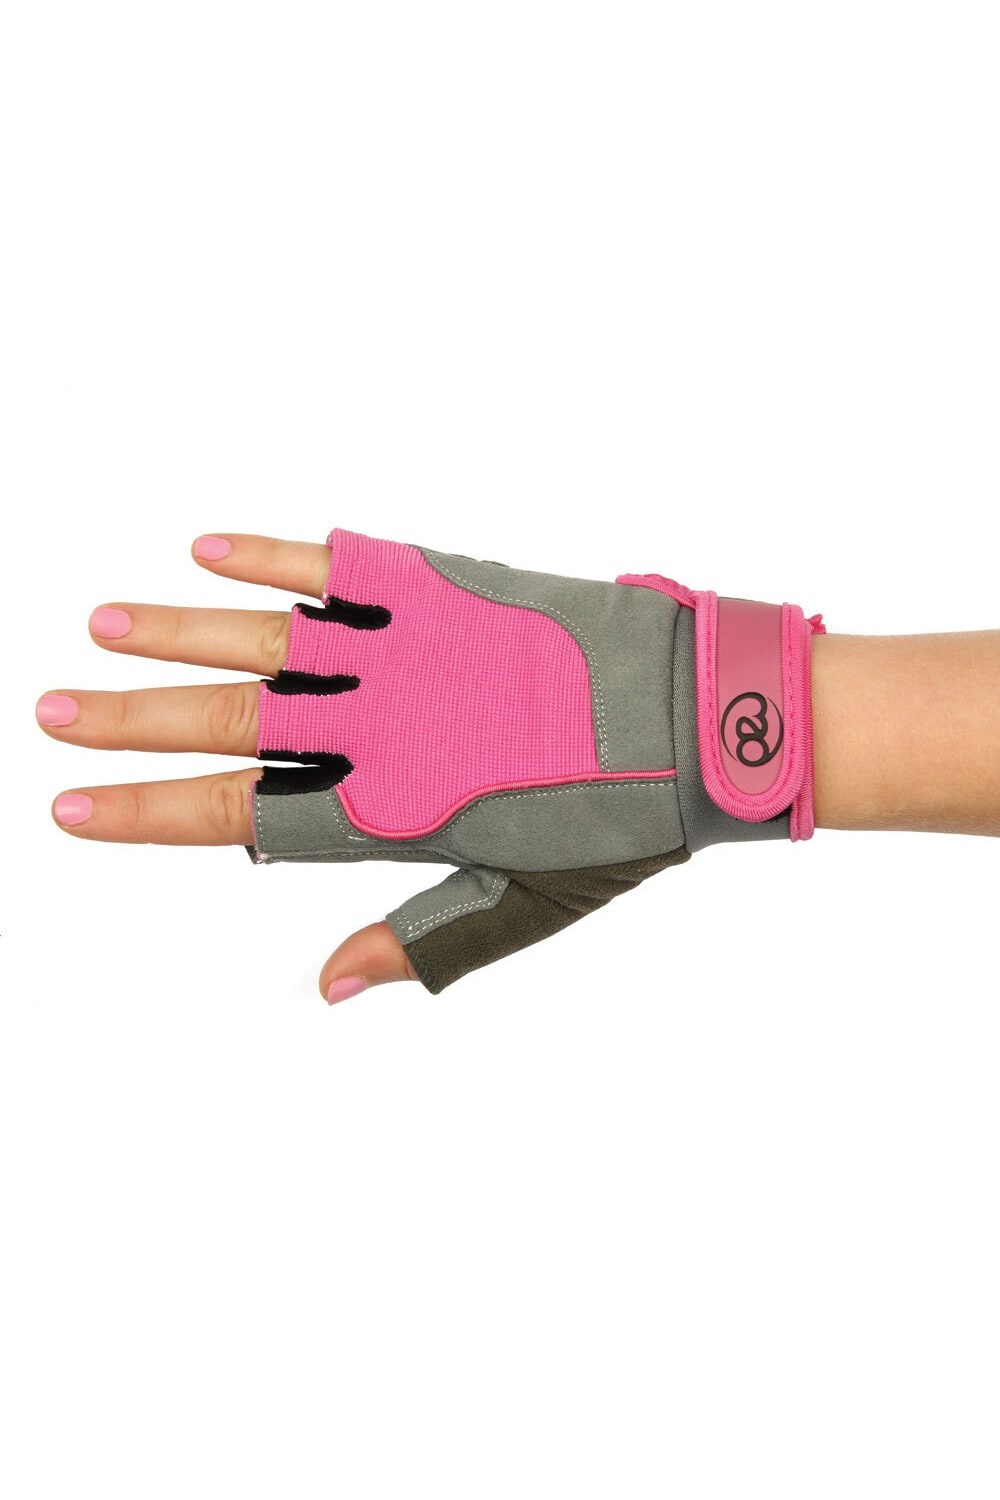 Womens Cross Training Gloves -